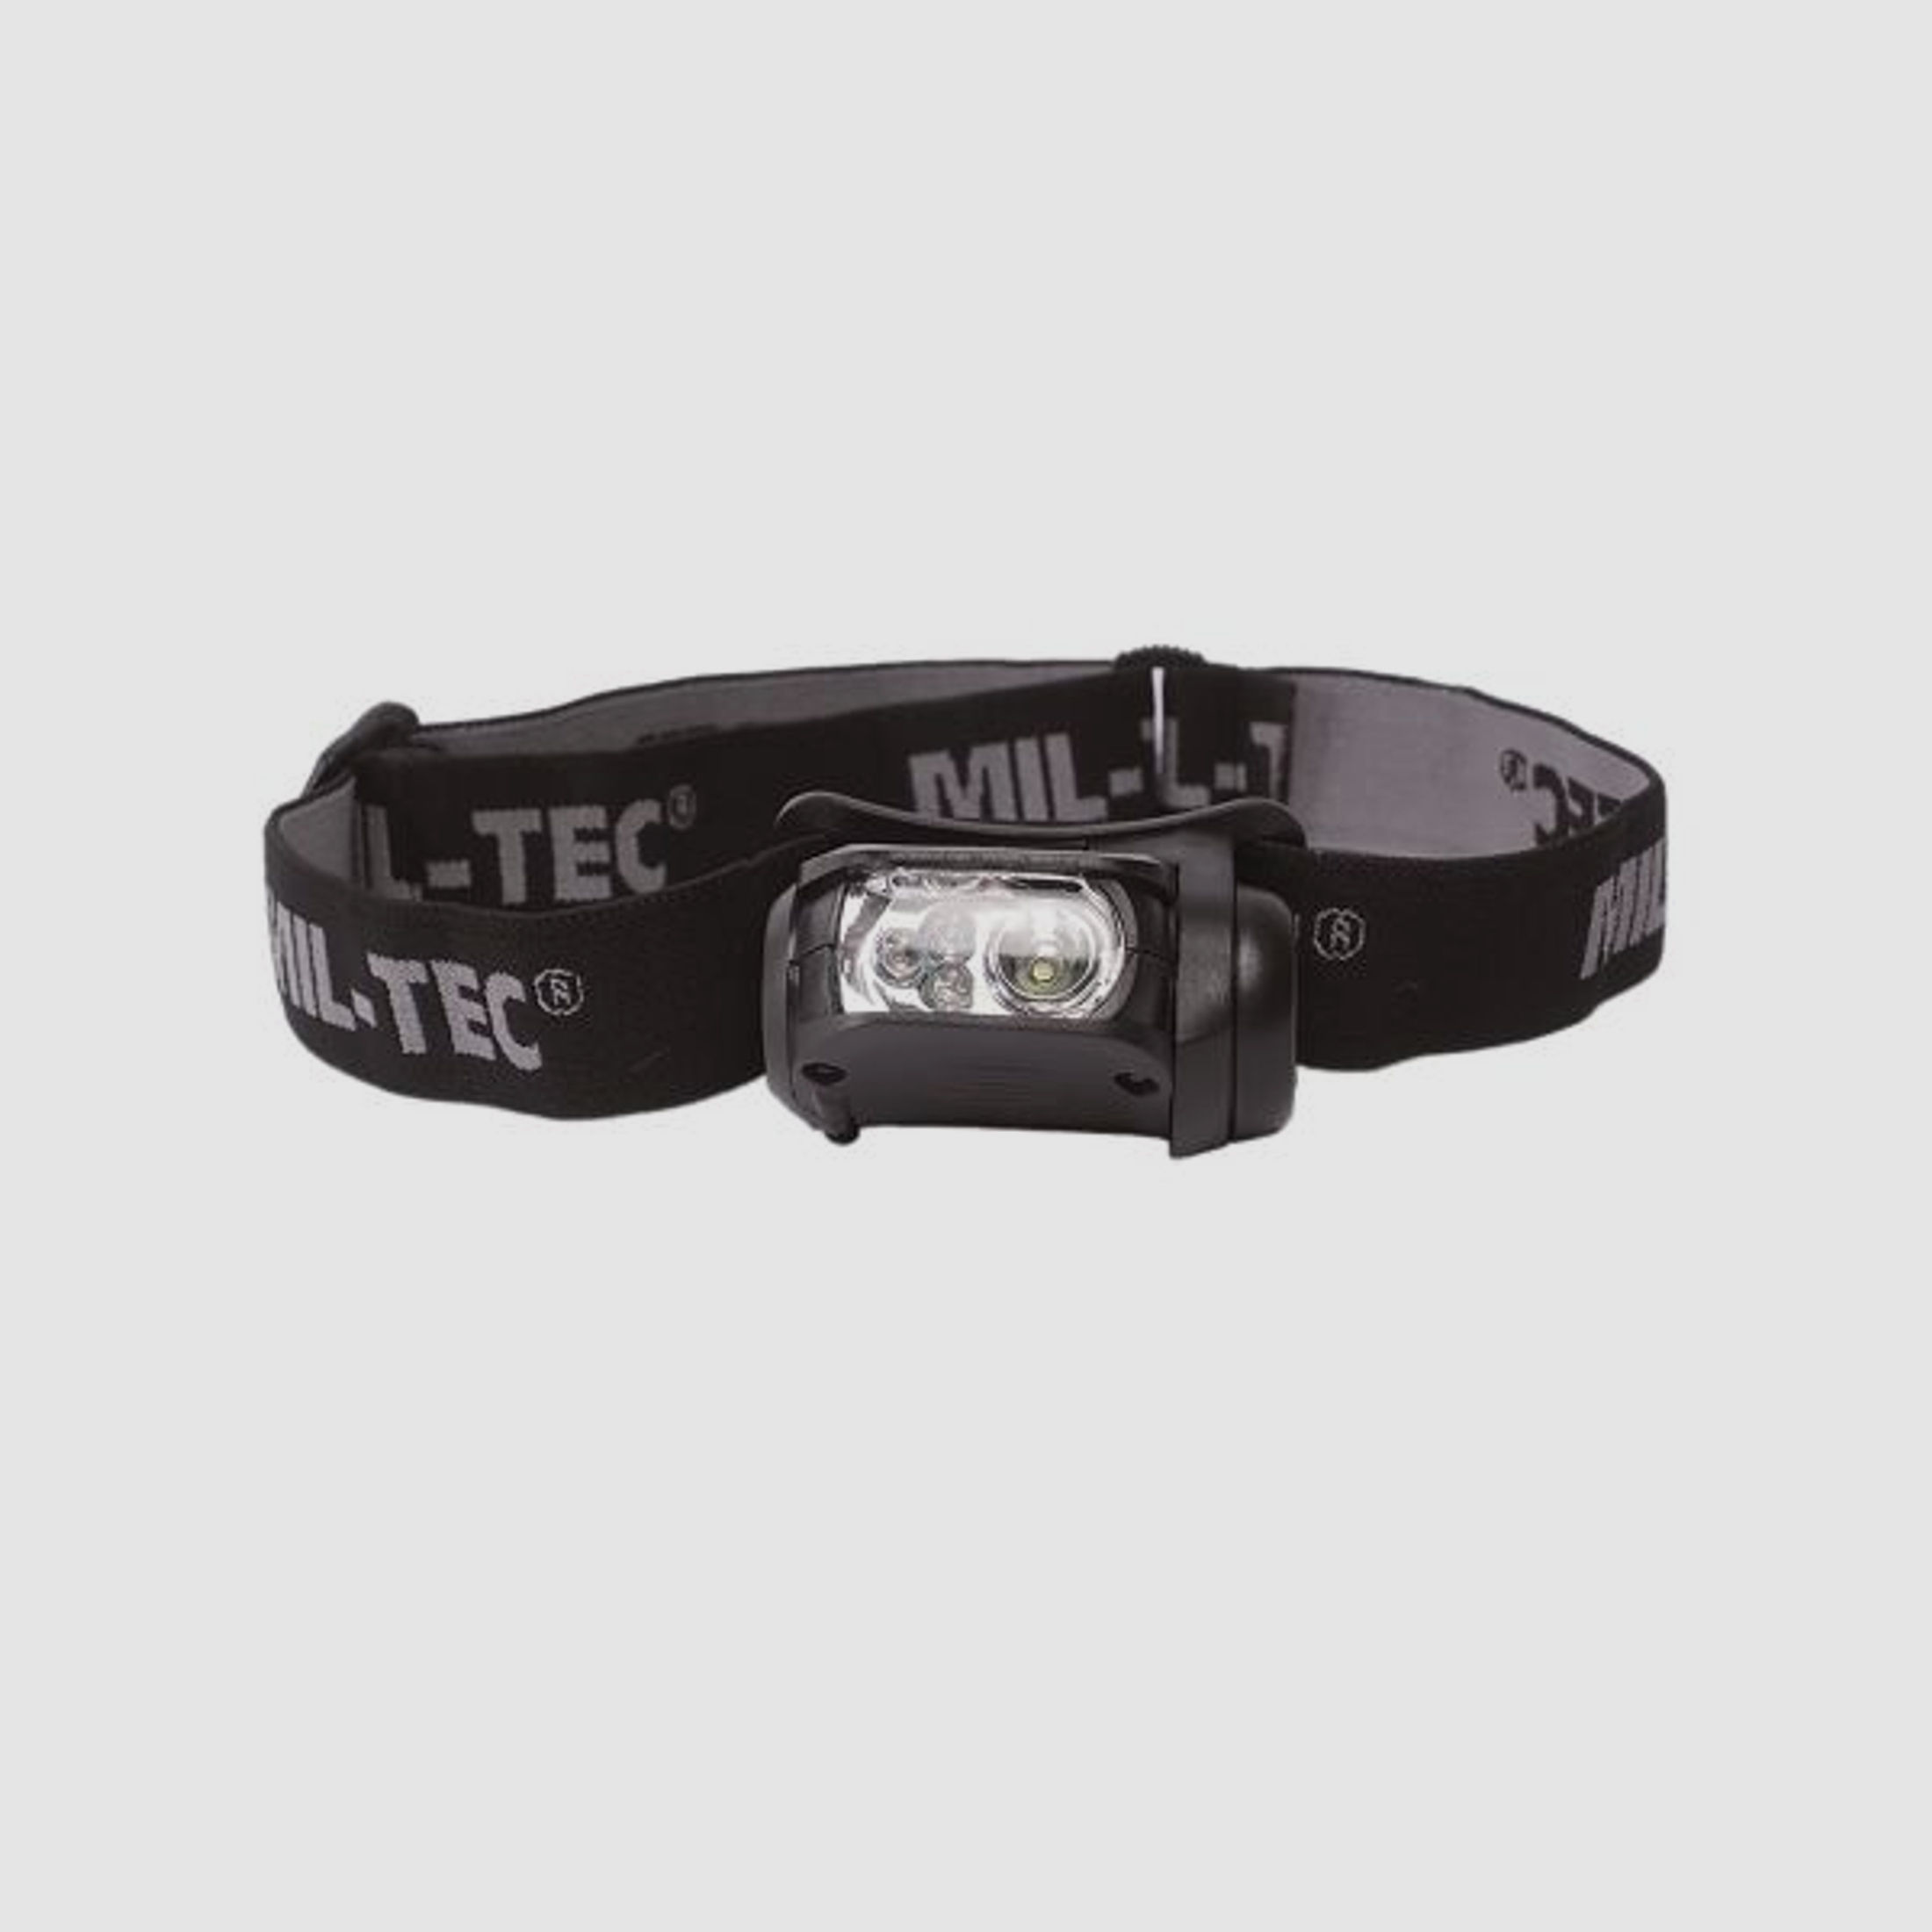 Mil-Tec Mil-Tec Kopflampe LED 4-farbig schwarz